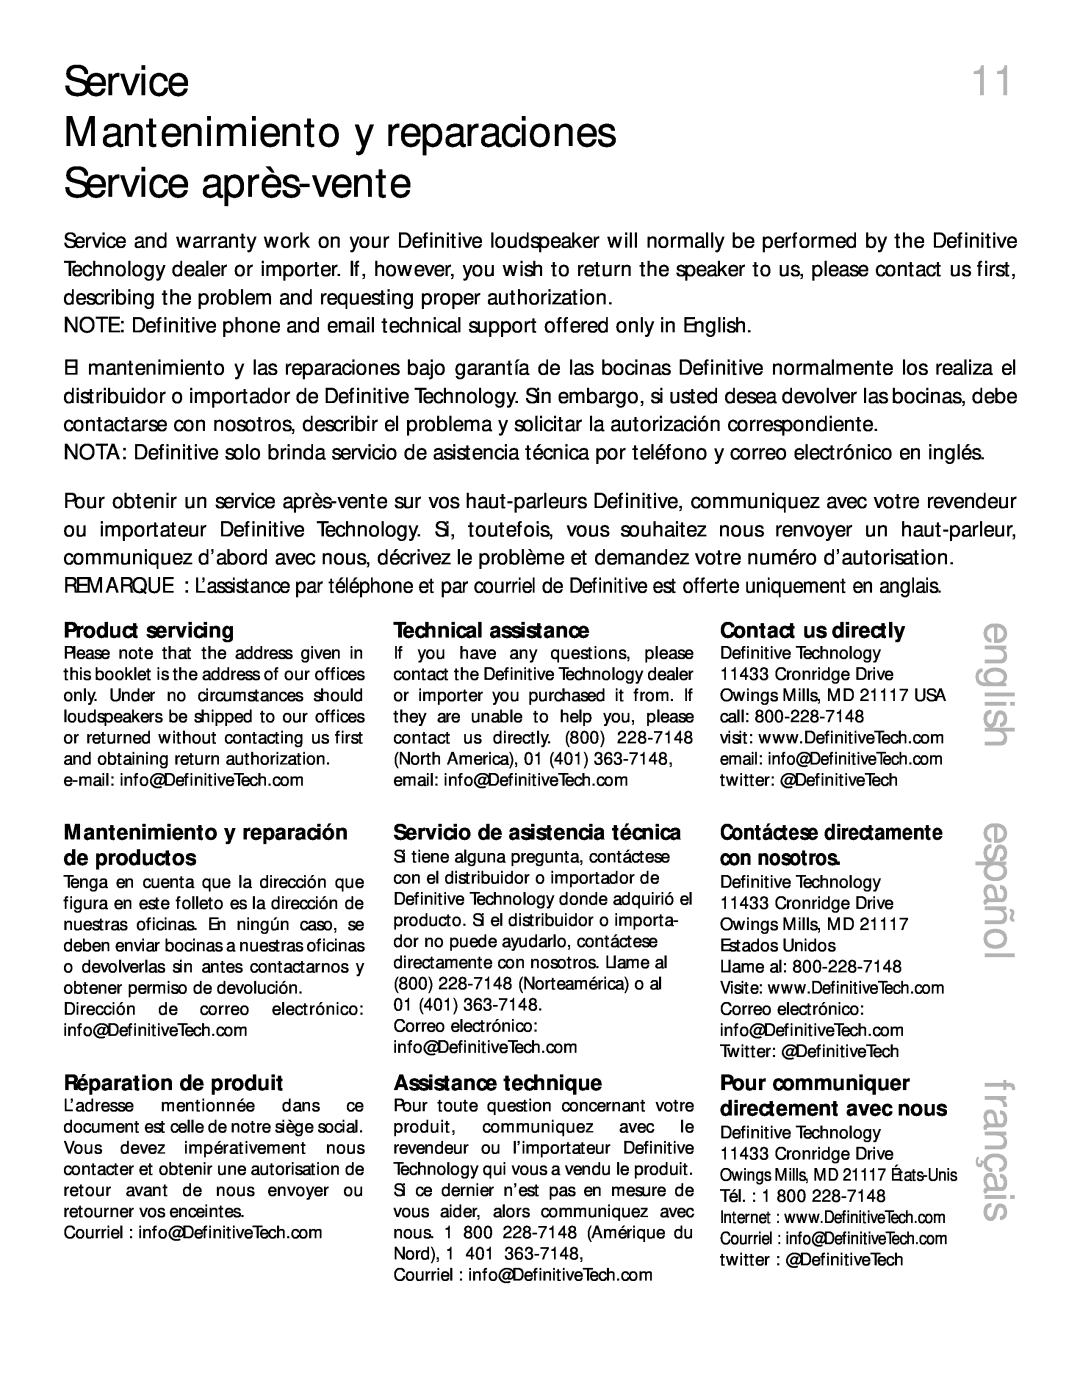 Definitive Technology 2000 owner manual Mantenimiento y reparaciones Service après-vente, español français, english 